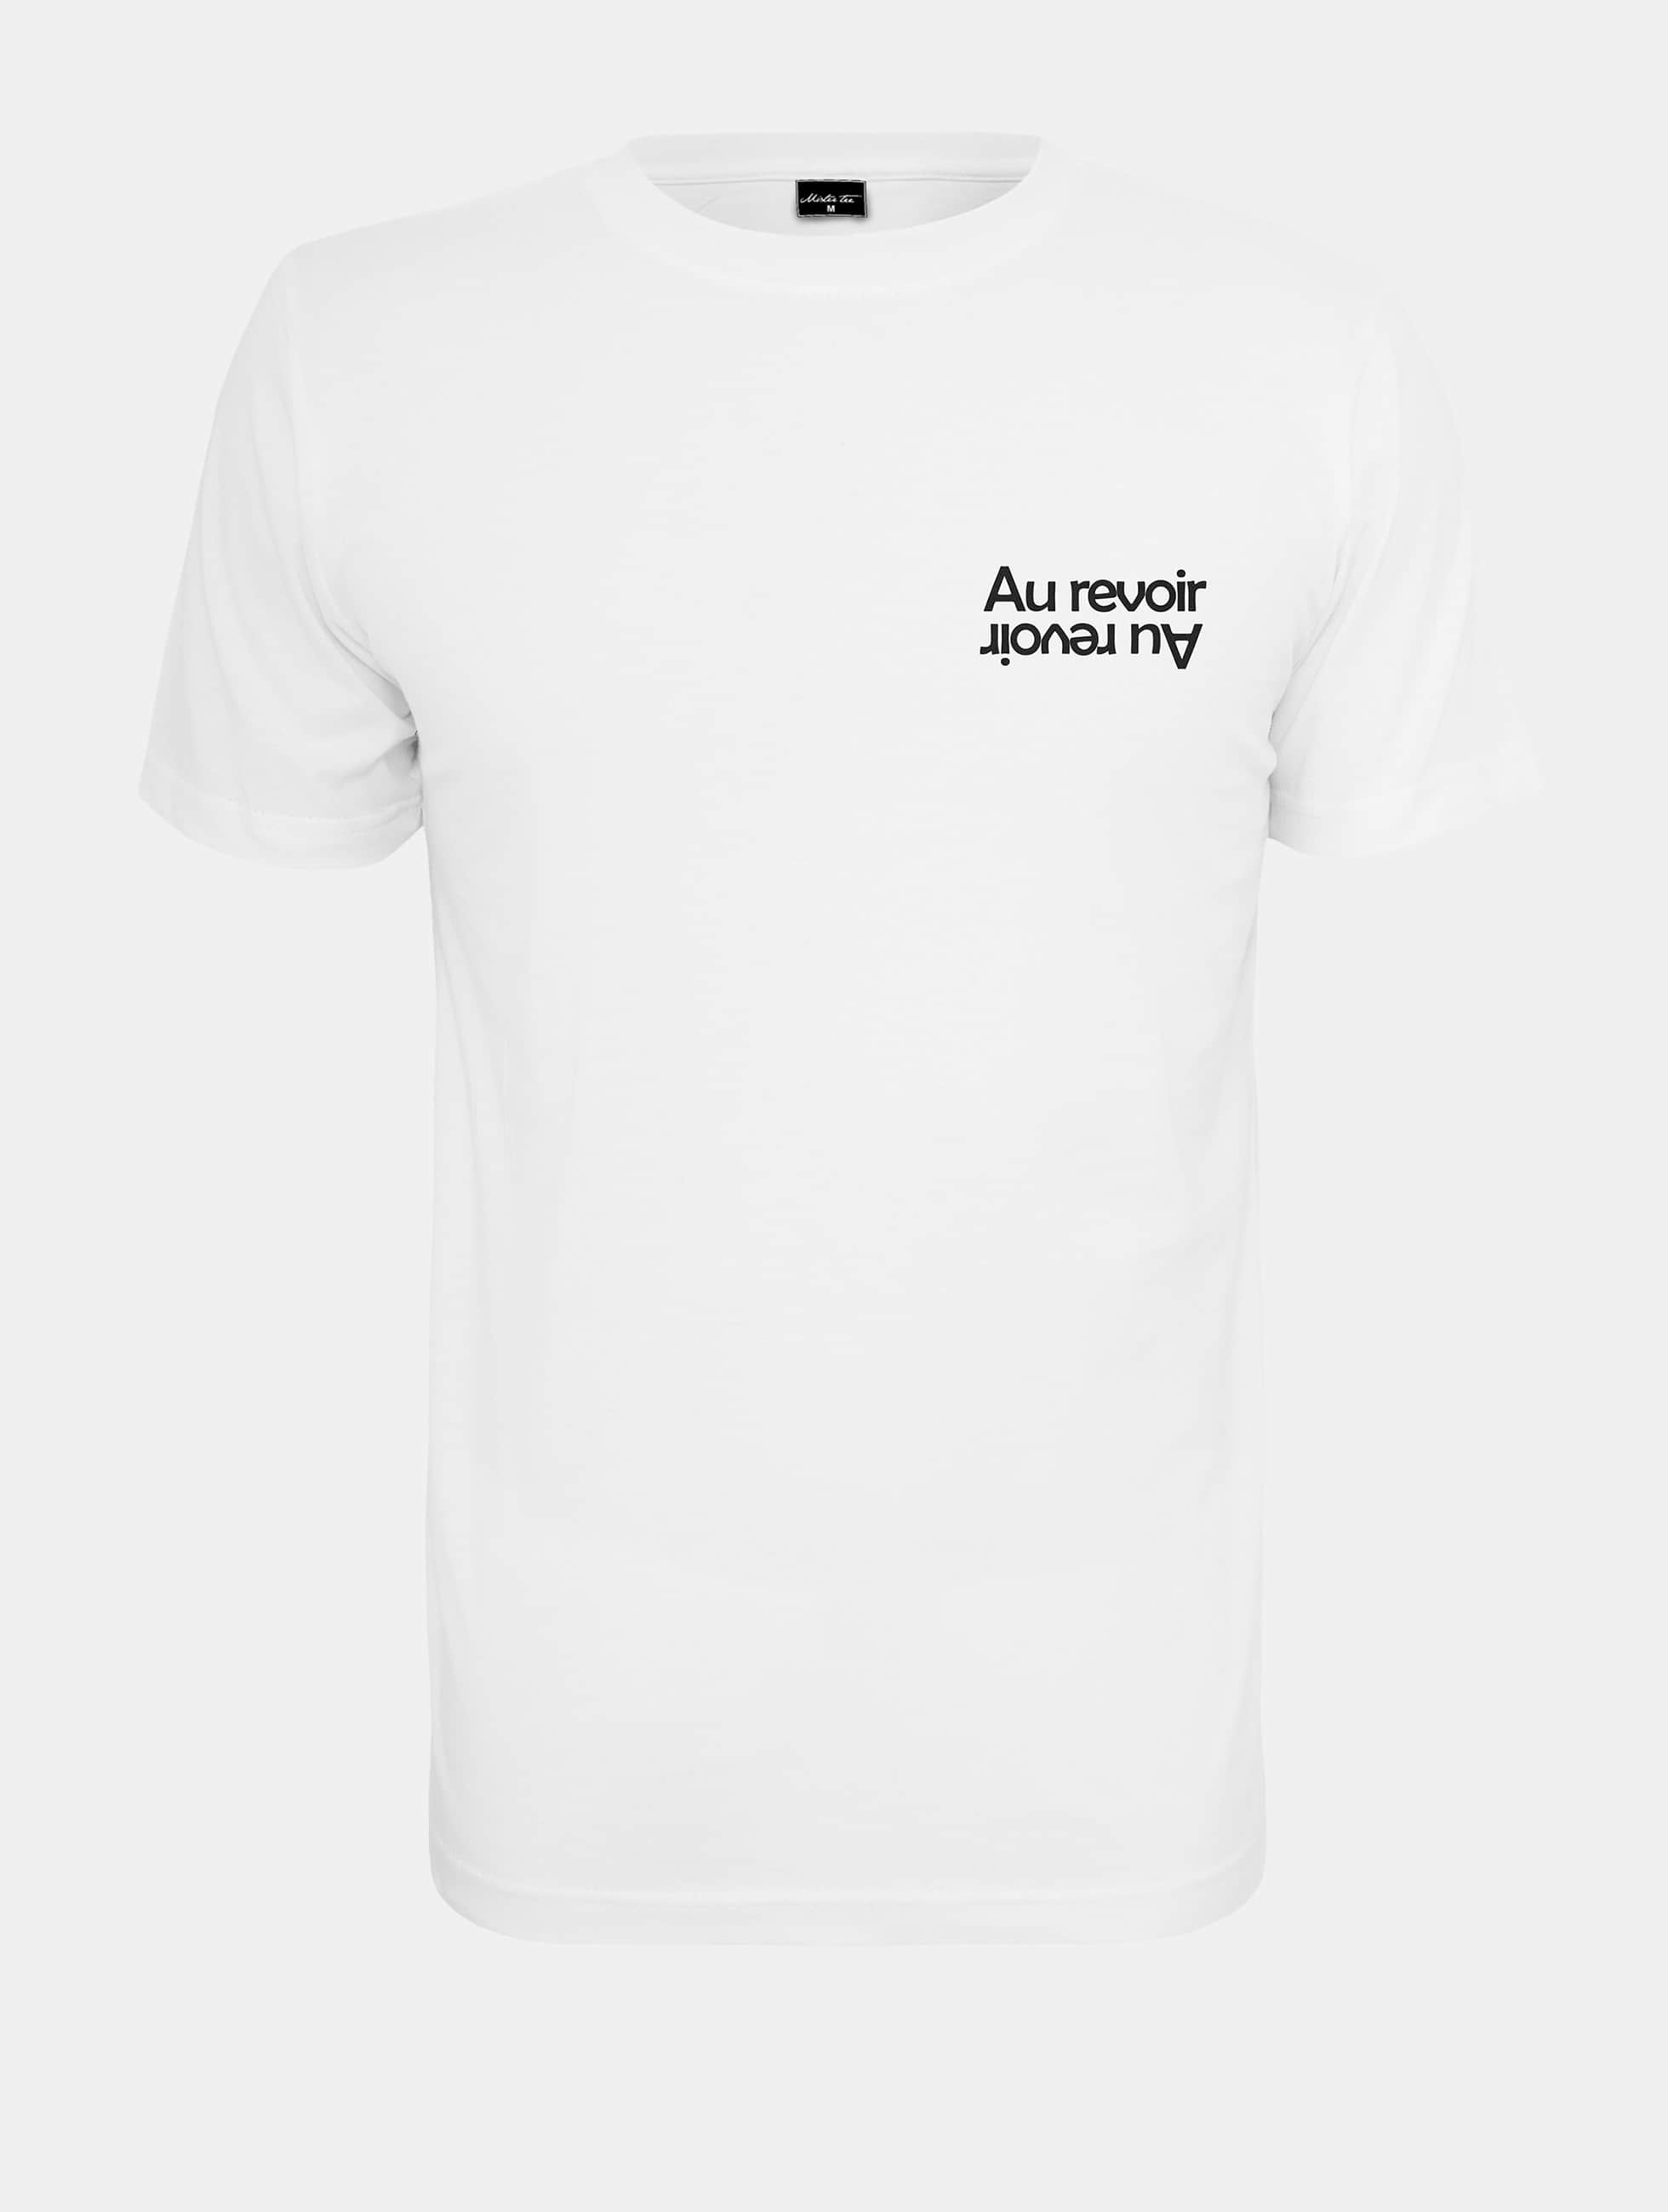 Ropa superiór Camiseta Au en blanco 1014168